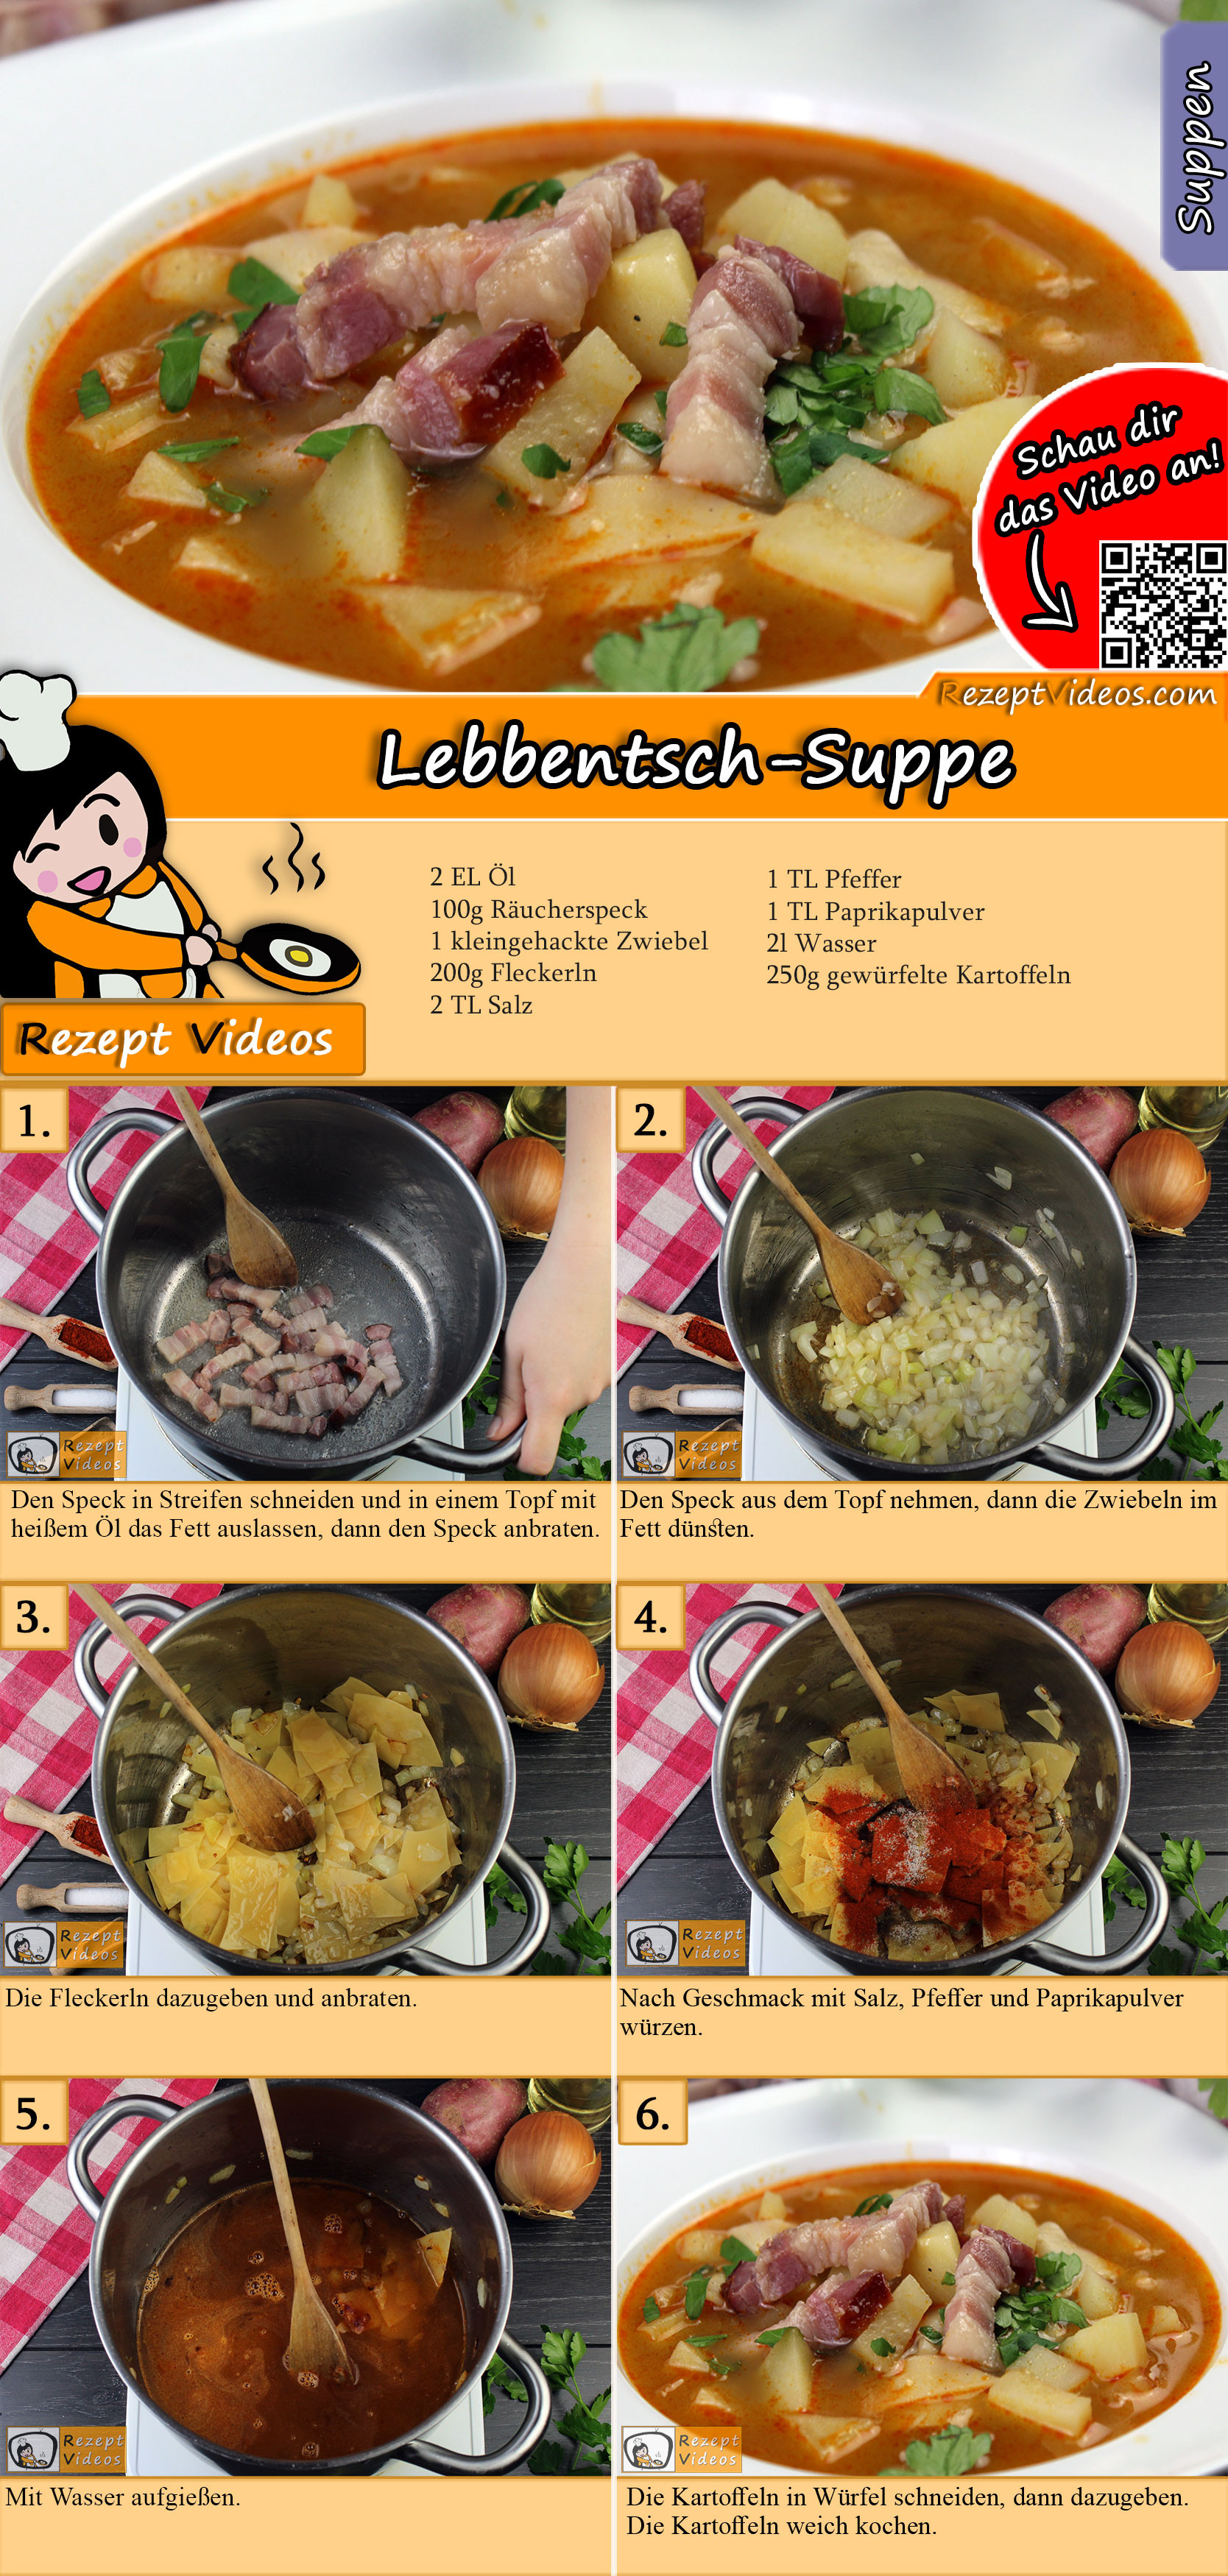 Lebbentsch-Suppe Rezept mit Video